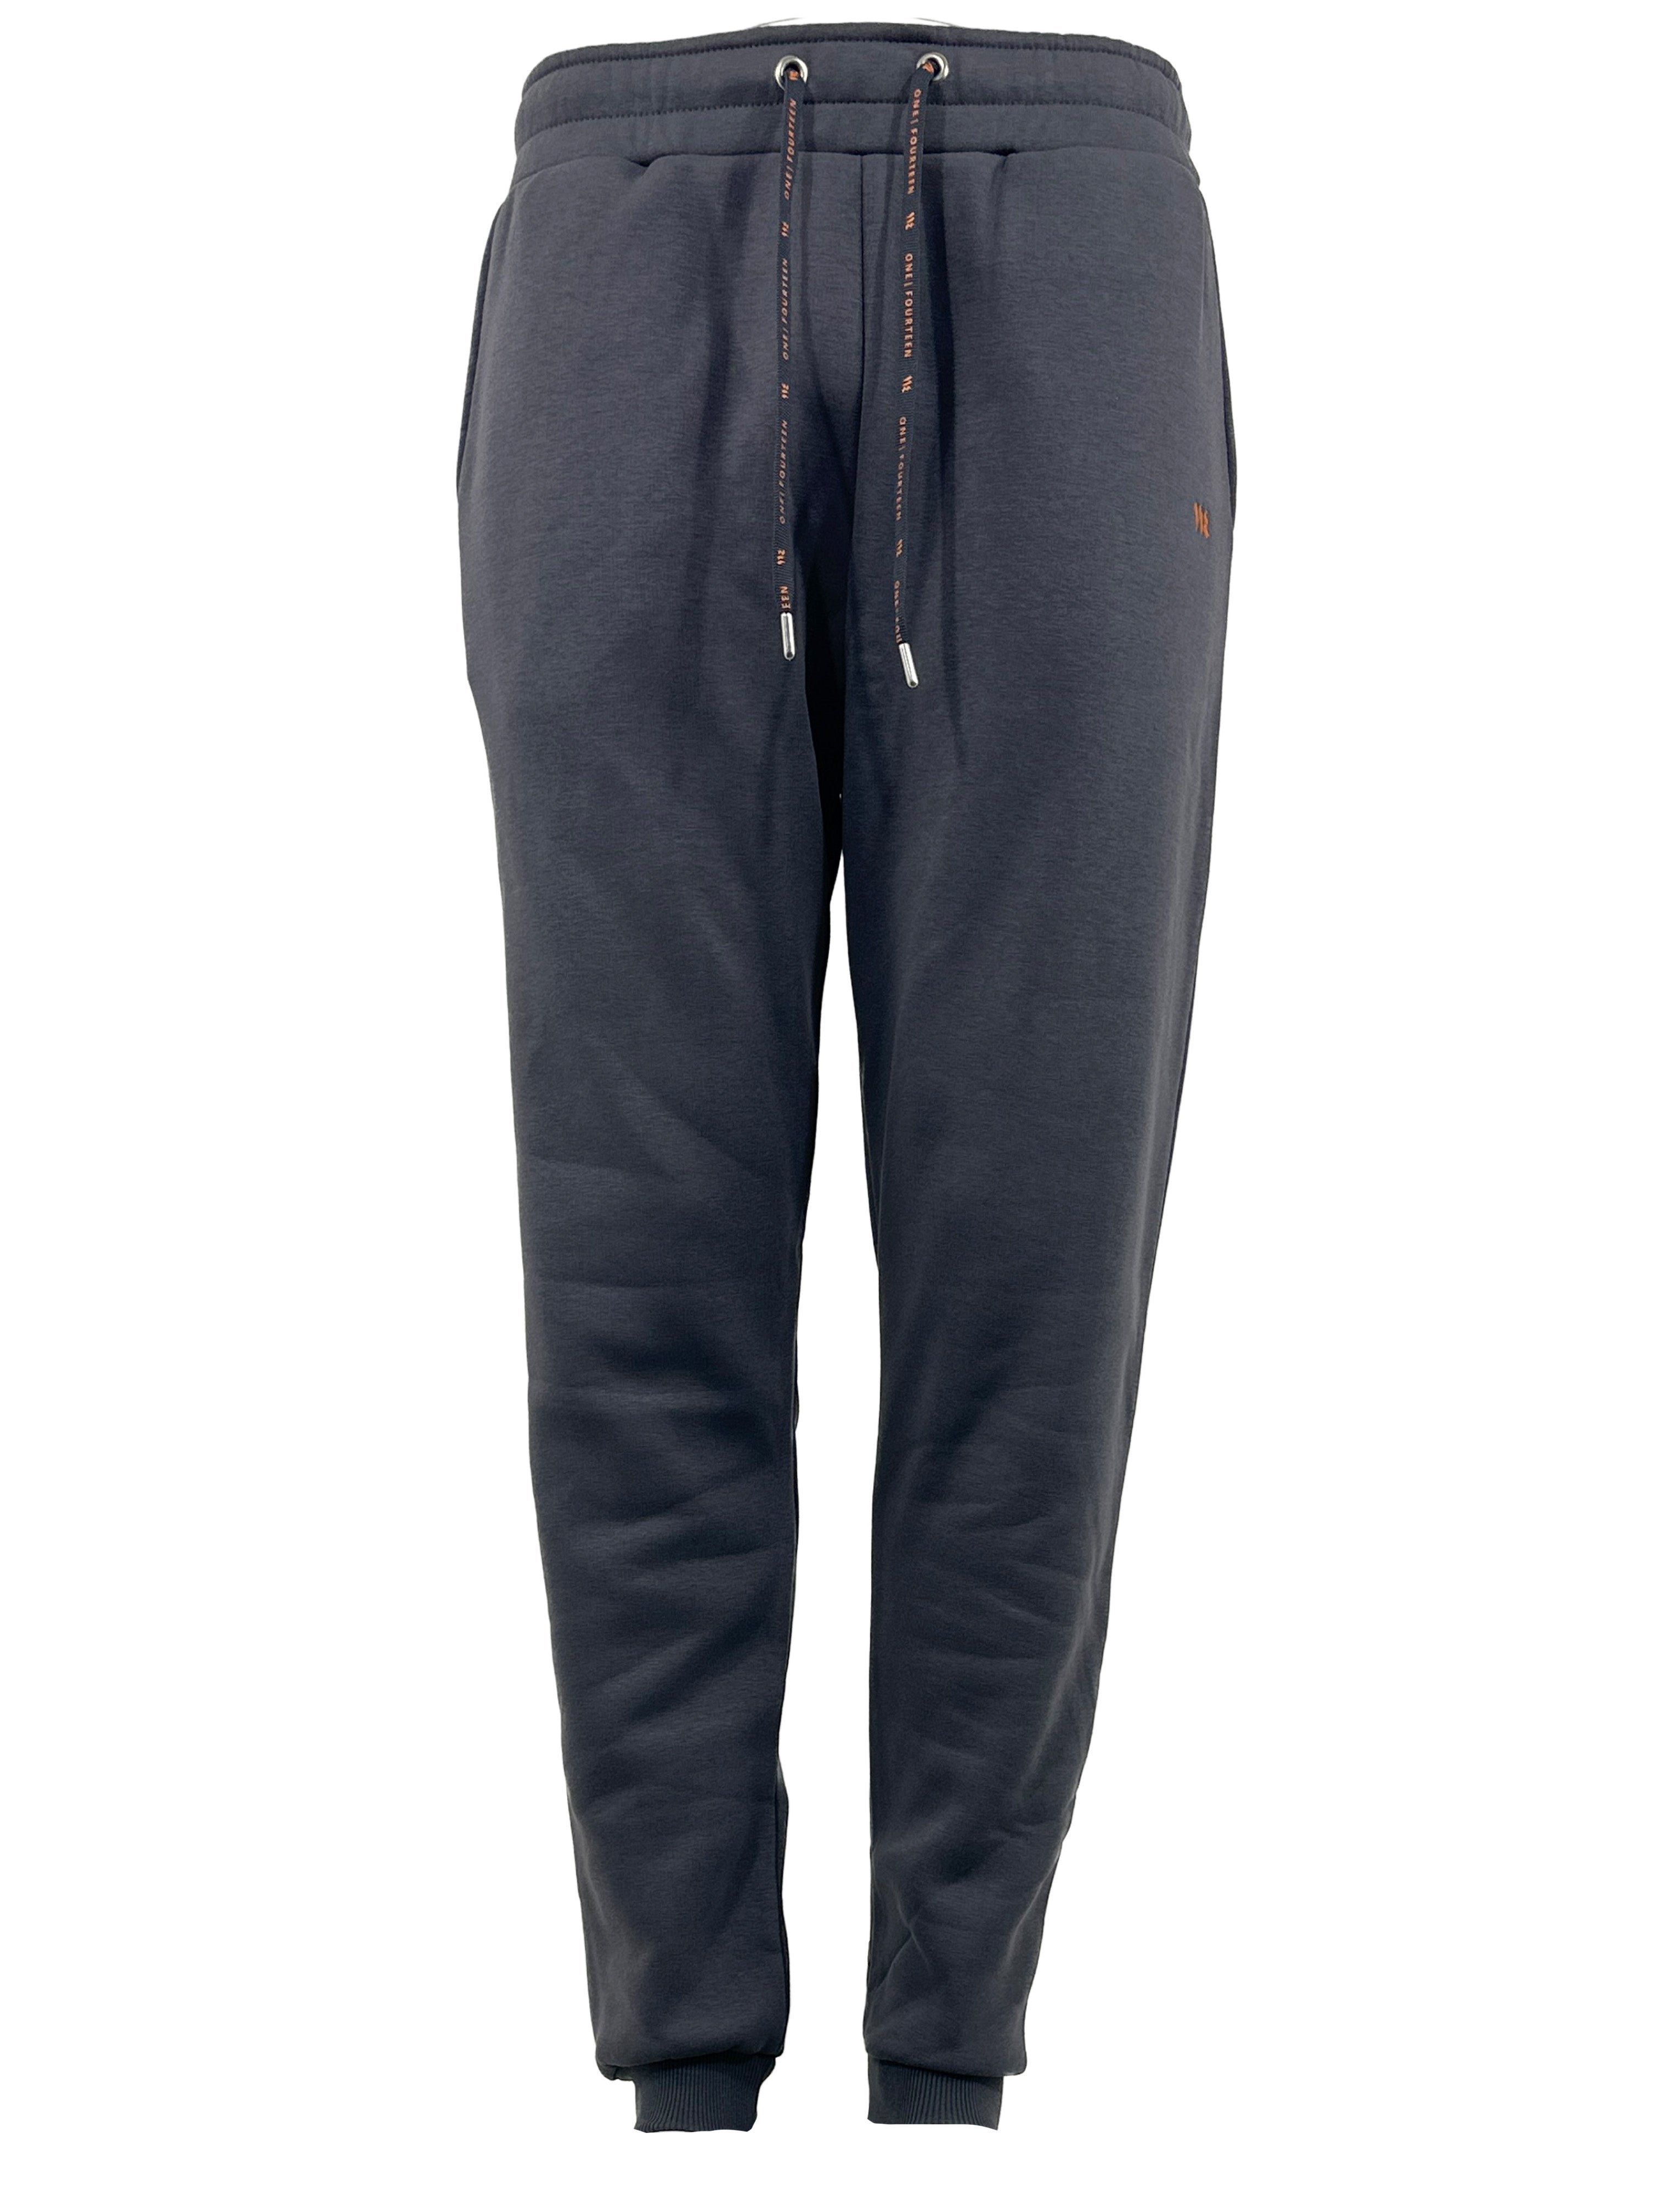 Muscat Urban Grey Joggers - One fourteen apparel